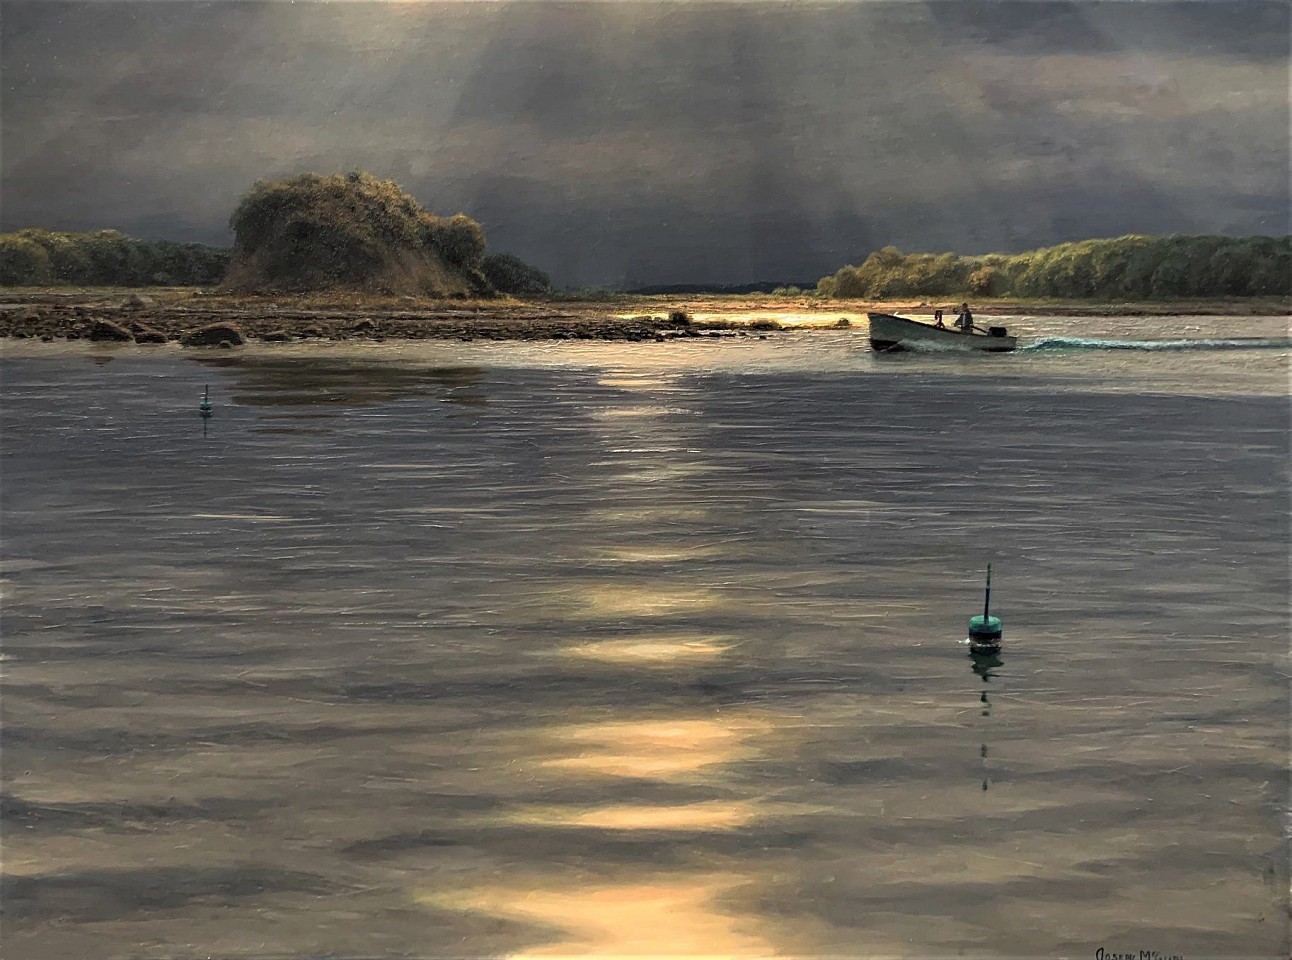 Joseph McGurl, The Boston Harbor Islands Project: Changing Light, Peddocks Island, 2020
18 x 24 in. (45.7 x 61 cm)
JM200312